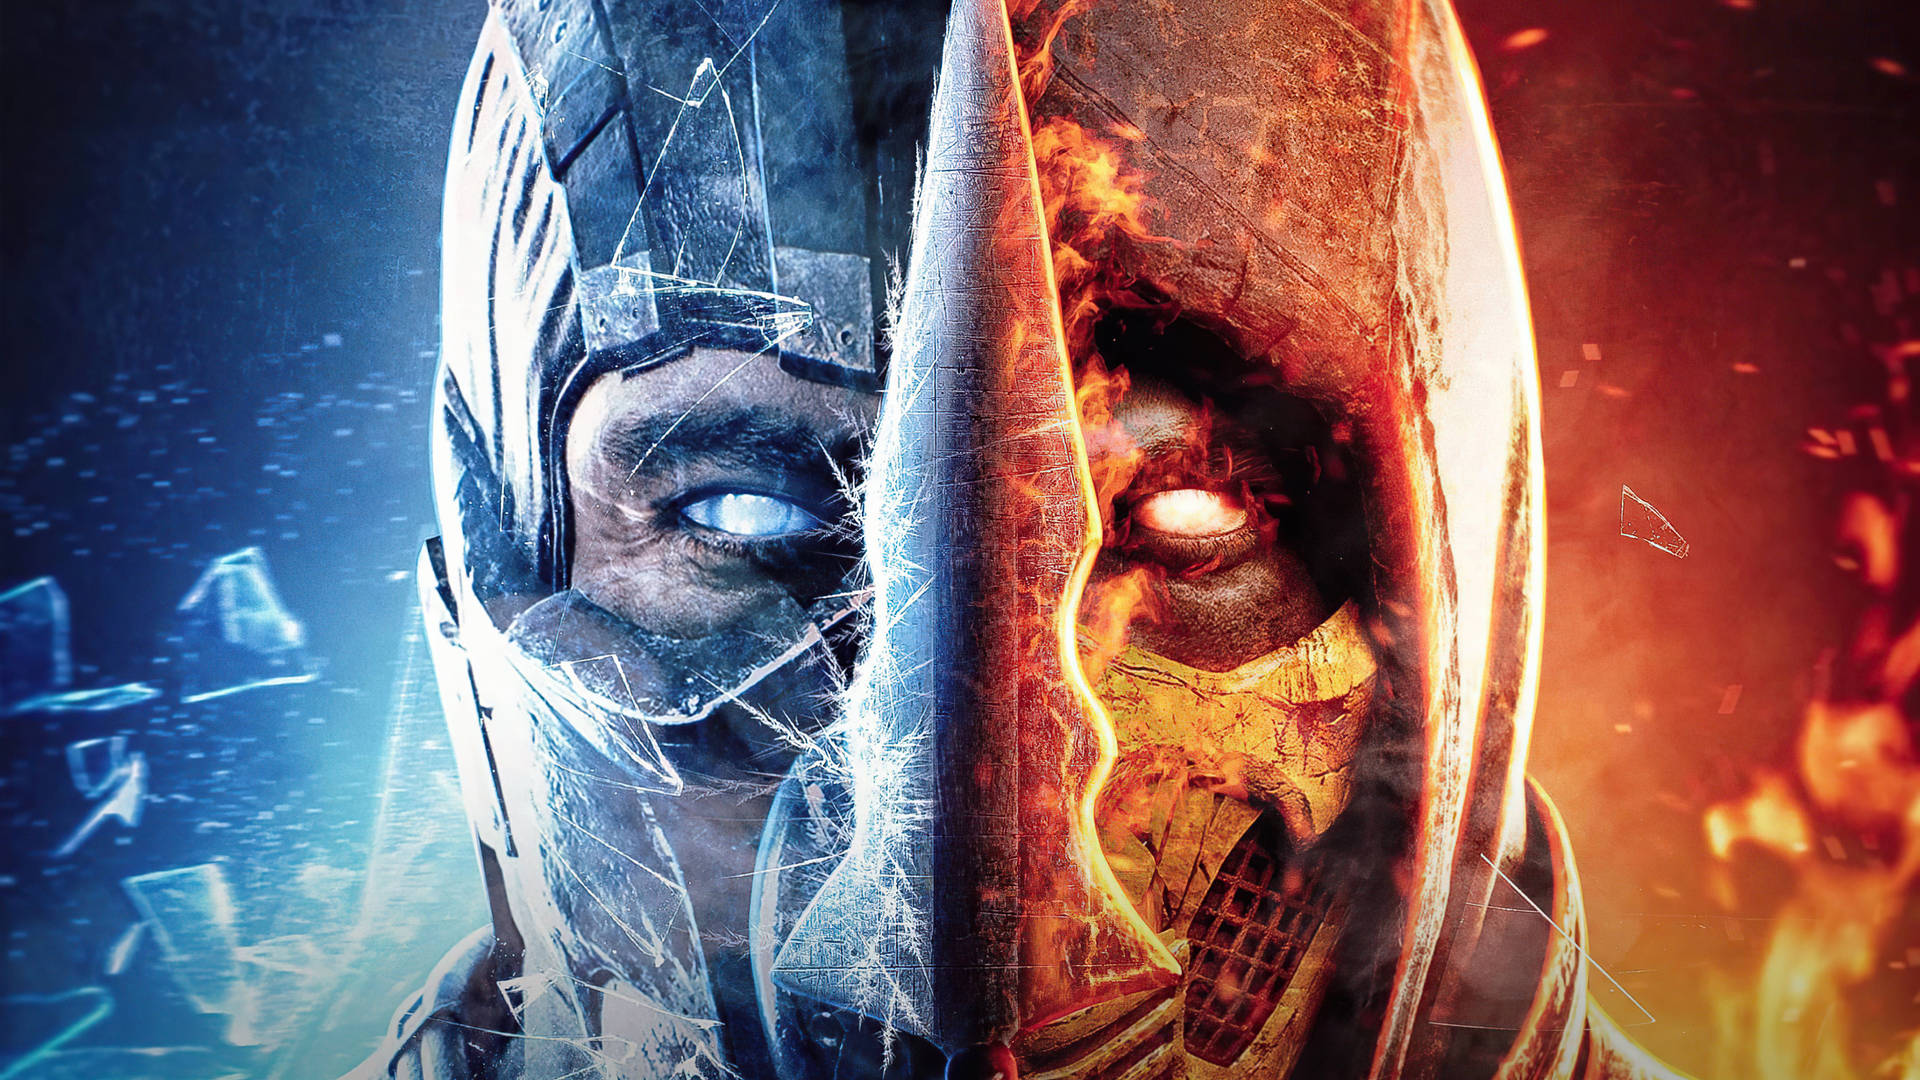 Mortal Kombat Scorpion Vs Sub Zero Behind Weapon Background